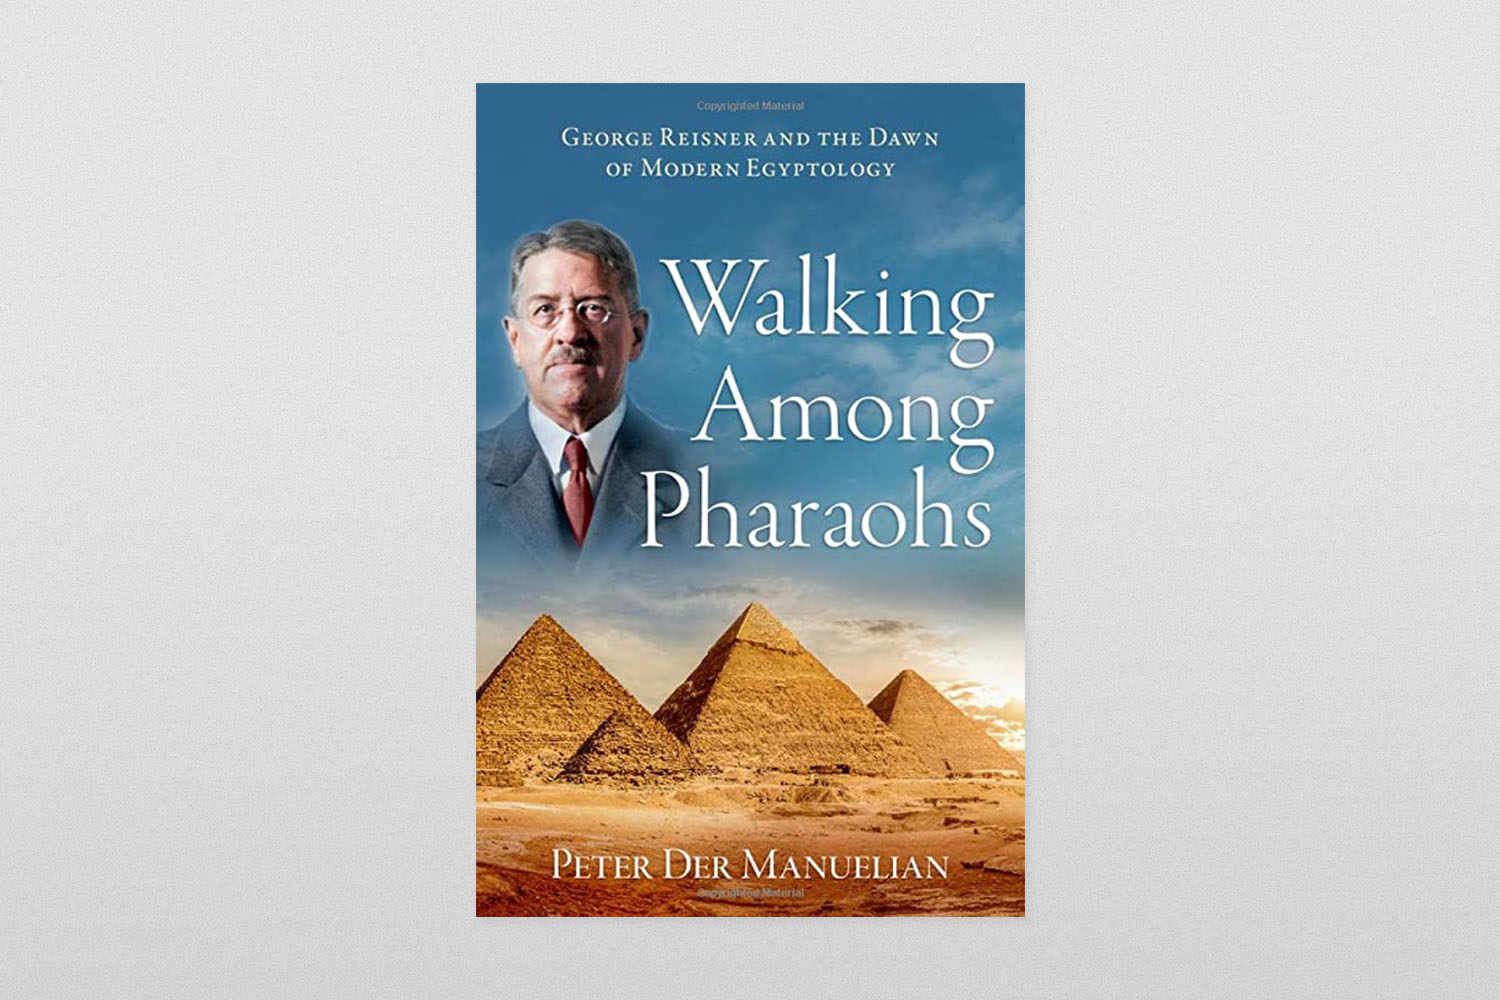 Walking Among Pharaohs- George Reisner and the Dawn of Modern Egyptology